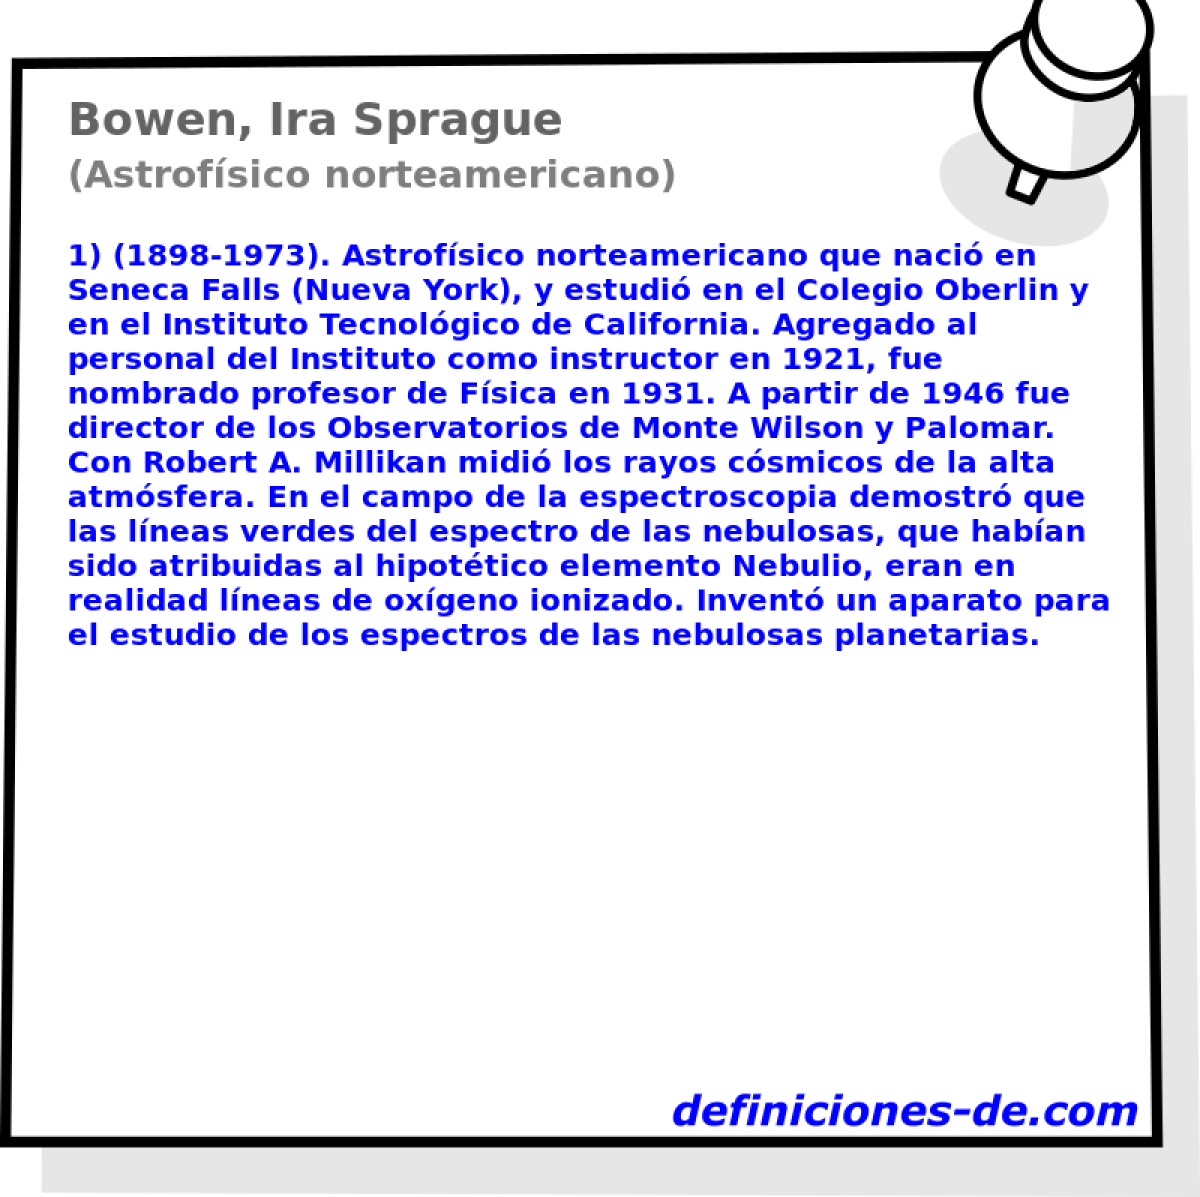 Bowen, Ira Sprague (Astrofsico norteamericano)